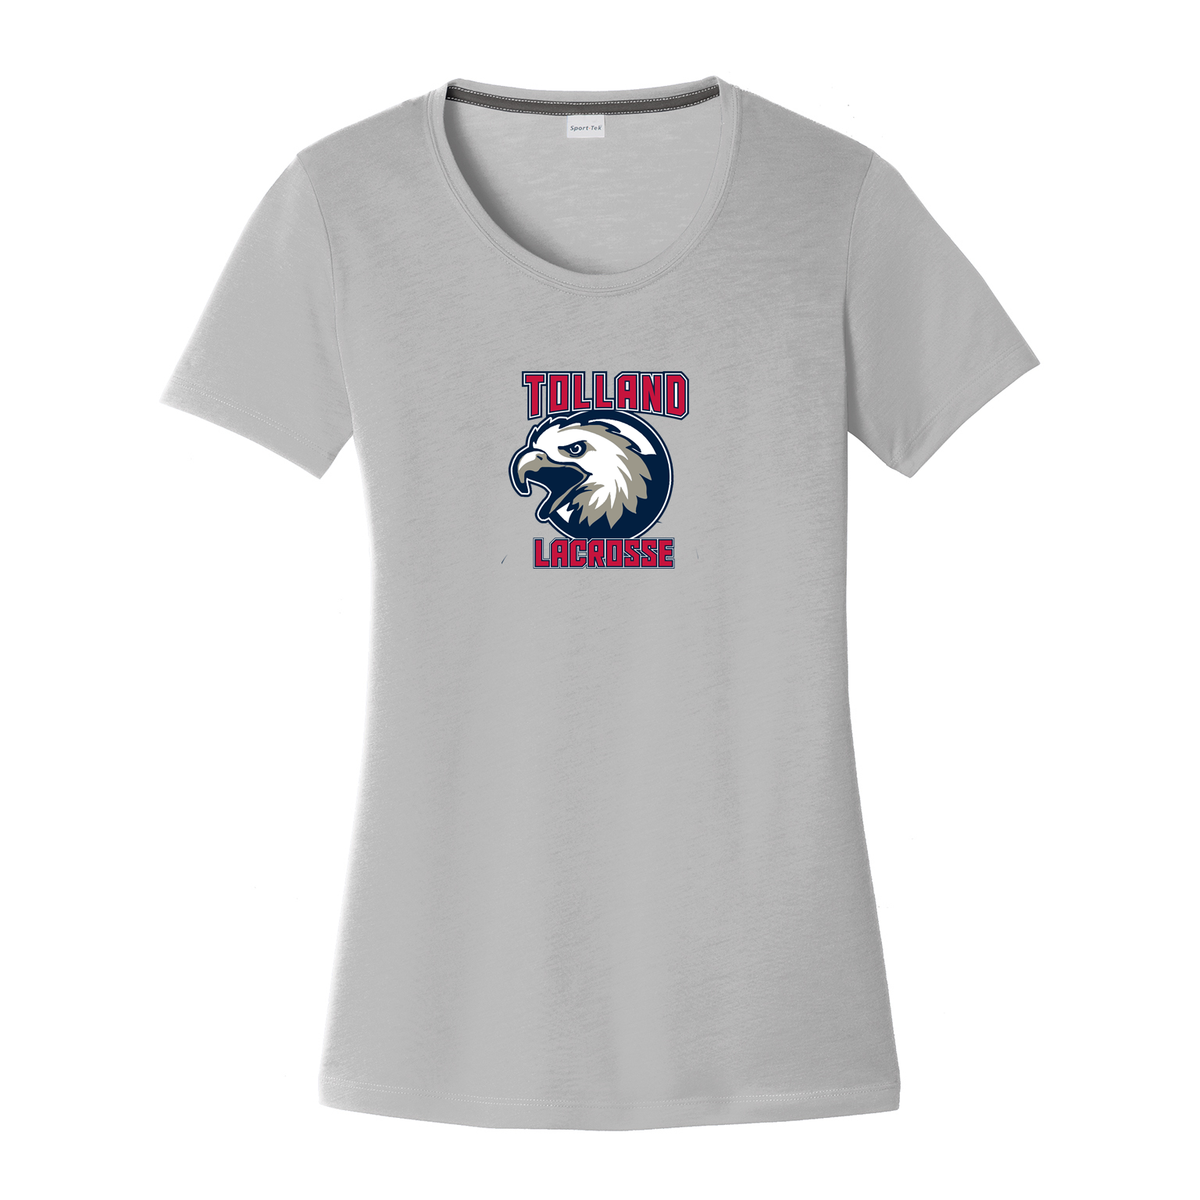 Tolland Lacrosse Club Women's CottonTouch Performance T-Shirt